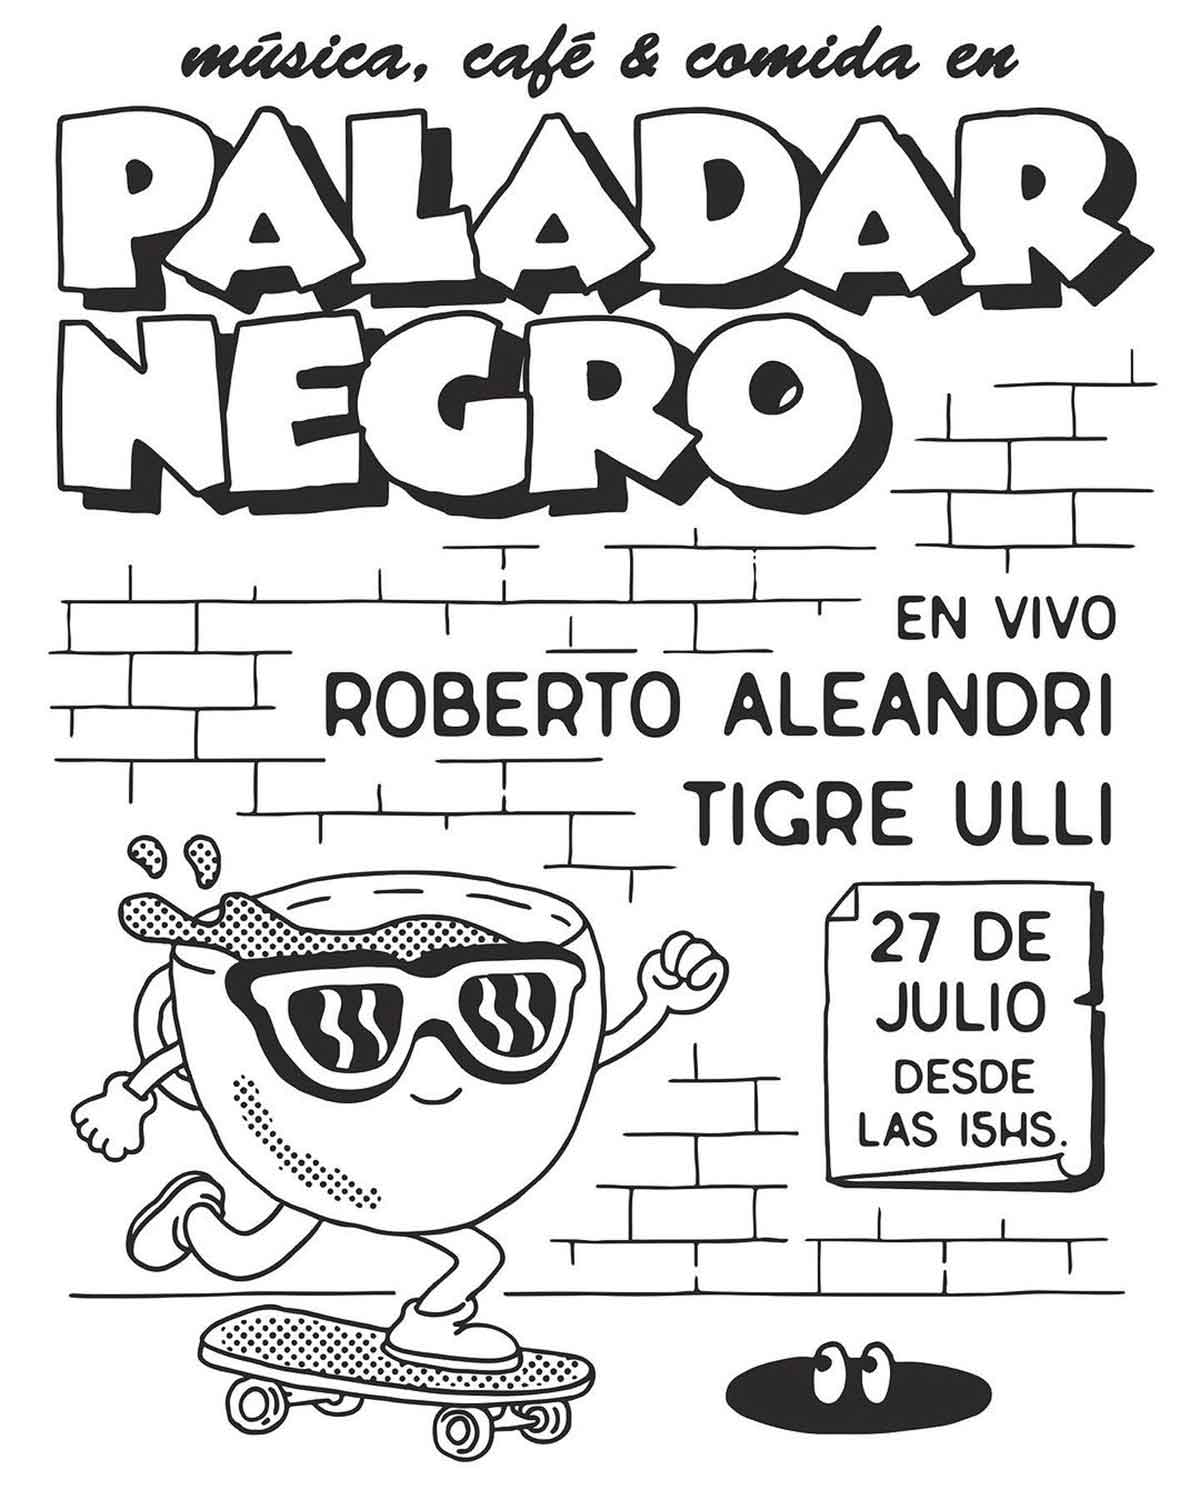 Roberto Aleandri y Tigre Ulli en Paladar Negro